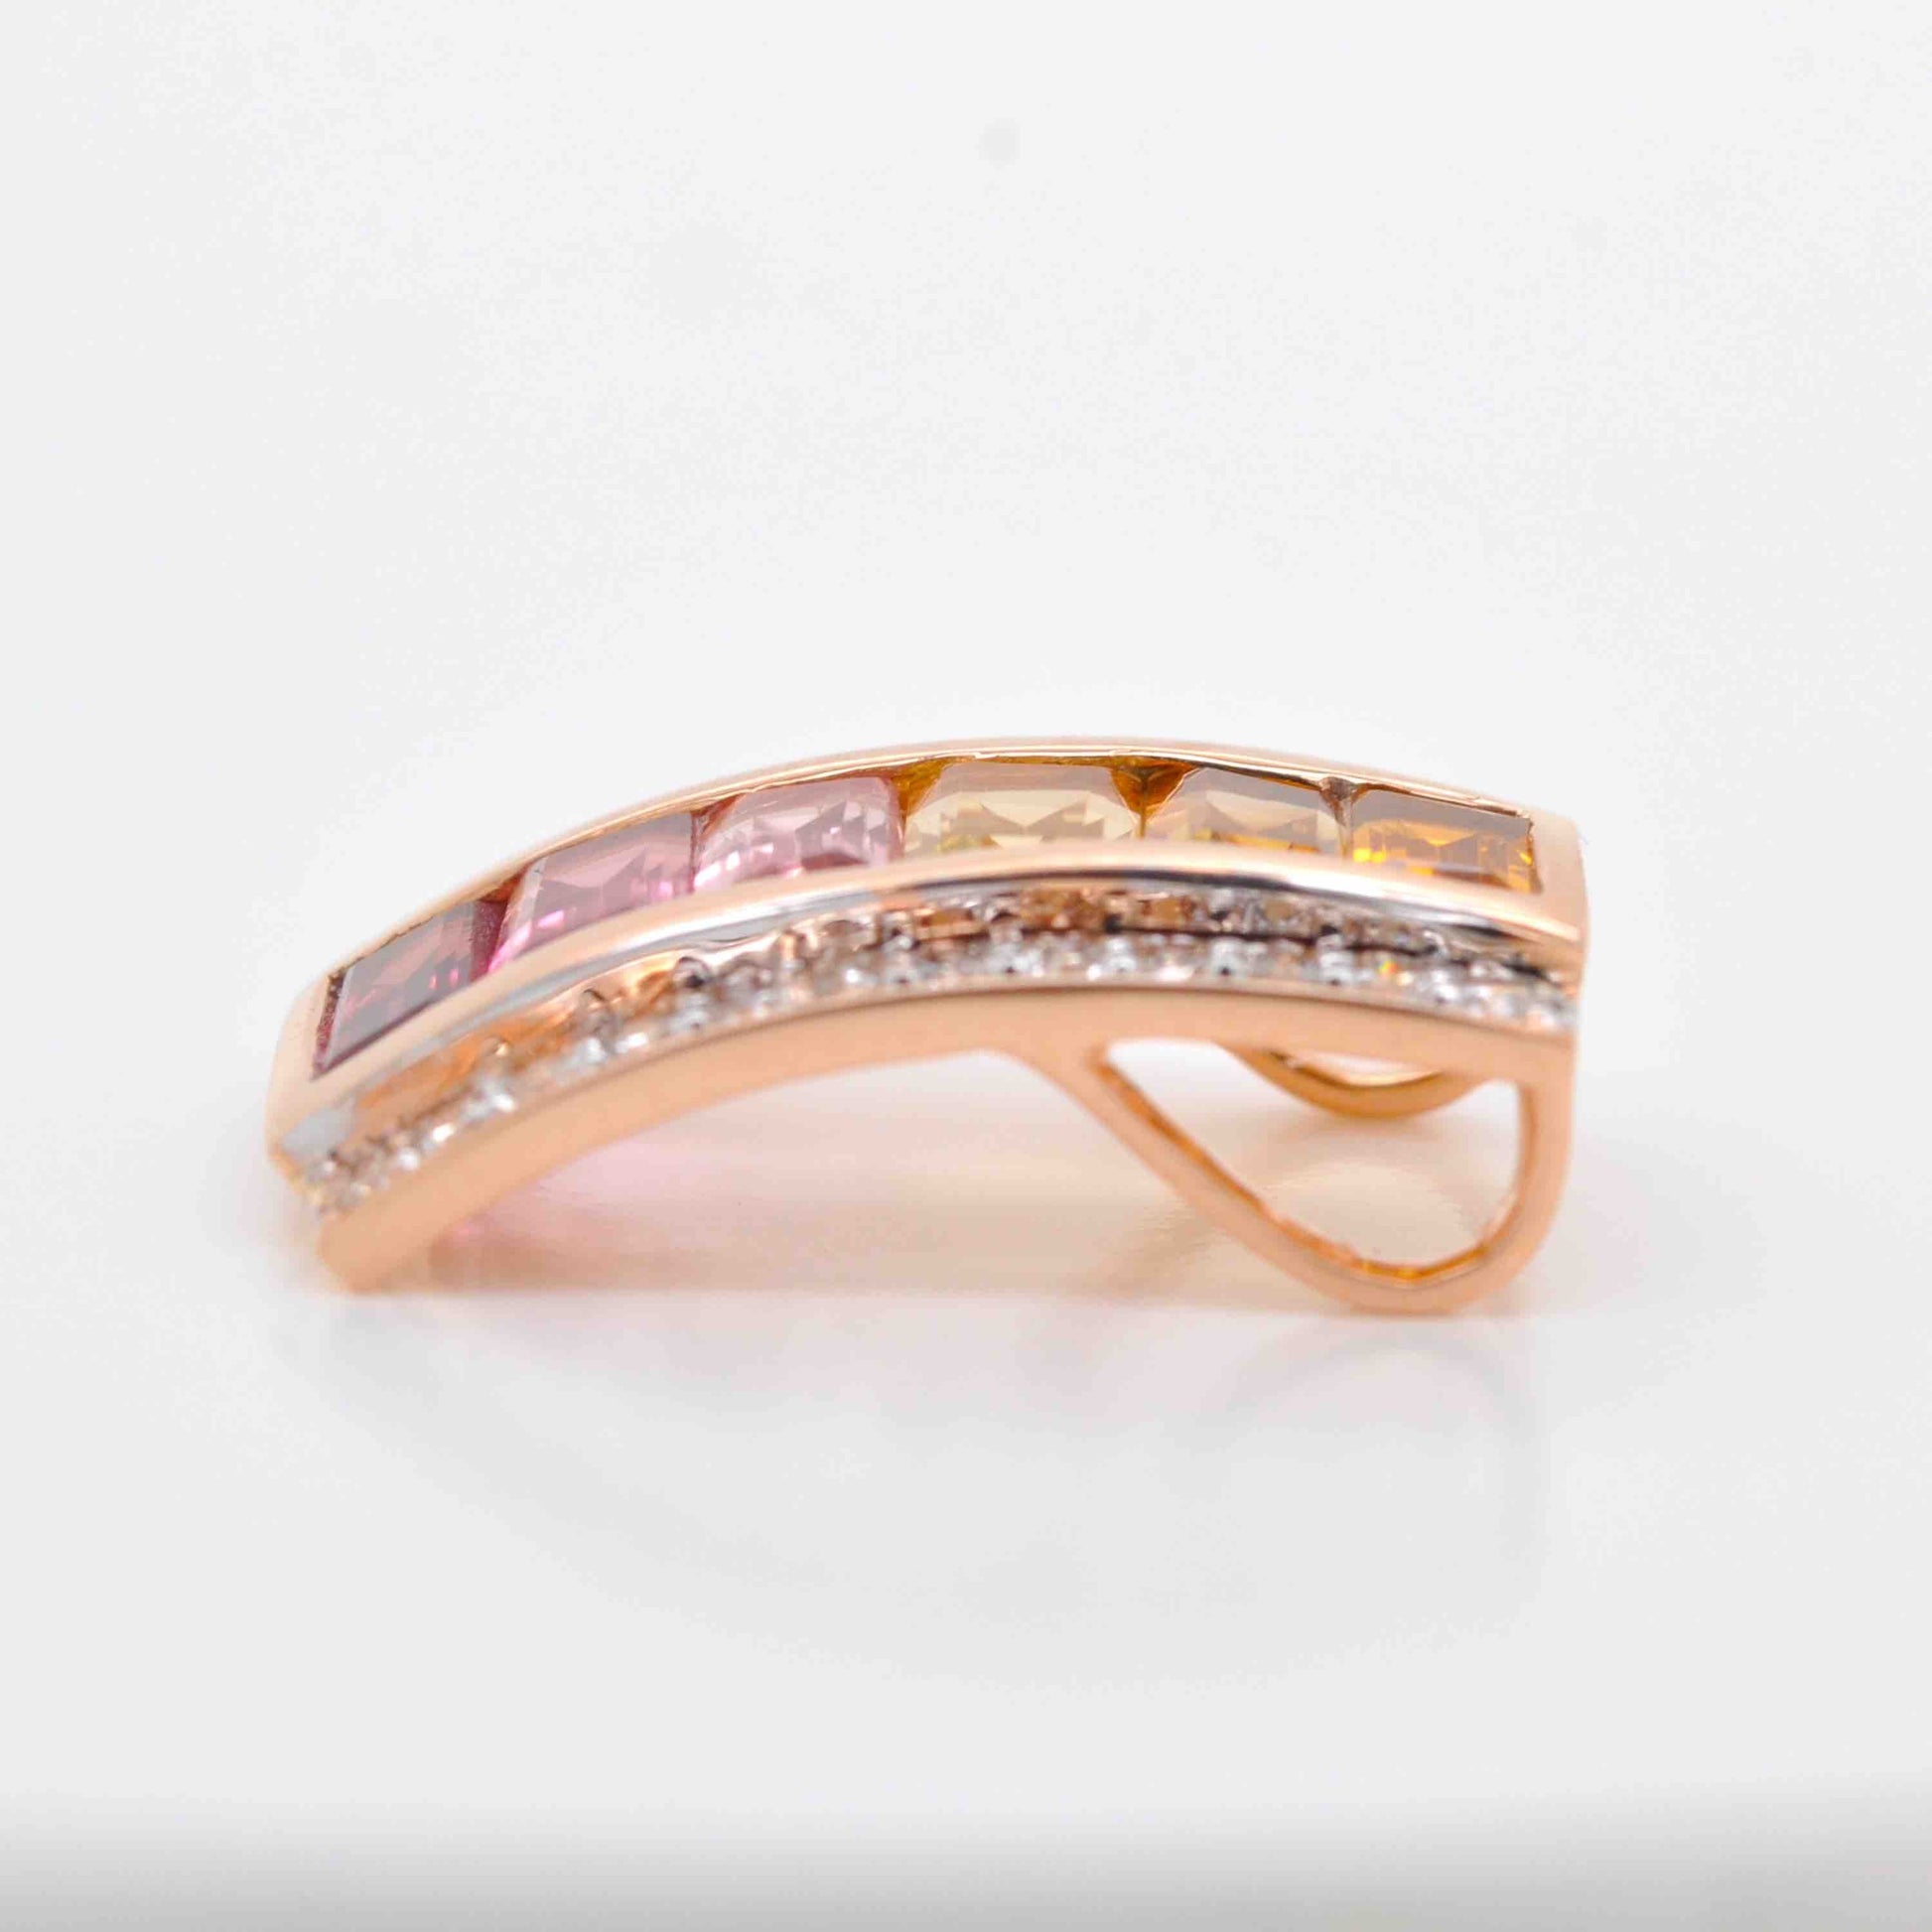 18K Gold Citrine Pink Tourmaline Pyramid Diamond Set - Vaibhav Dhadda Jewelry